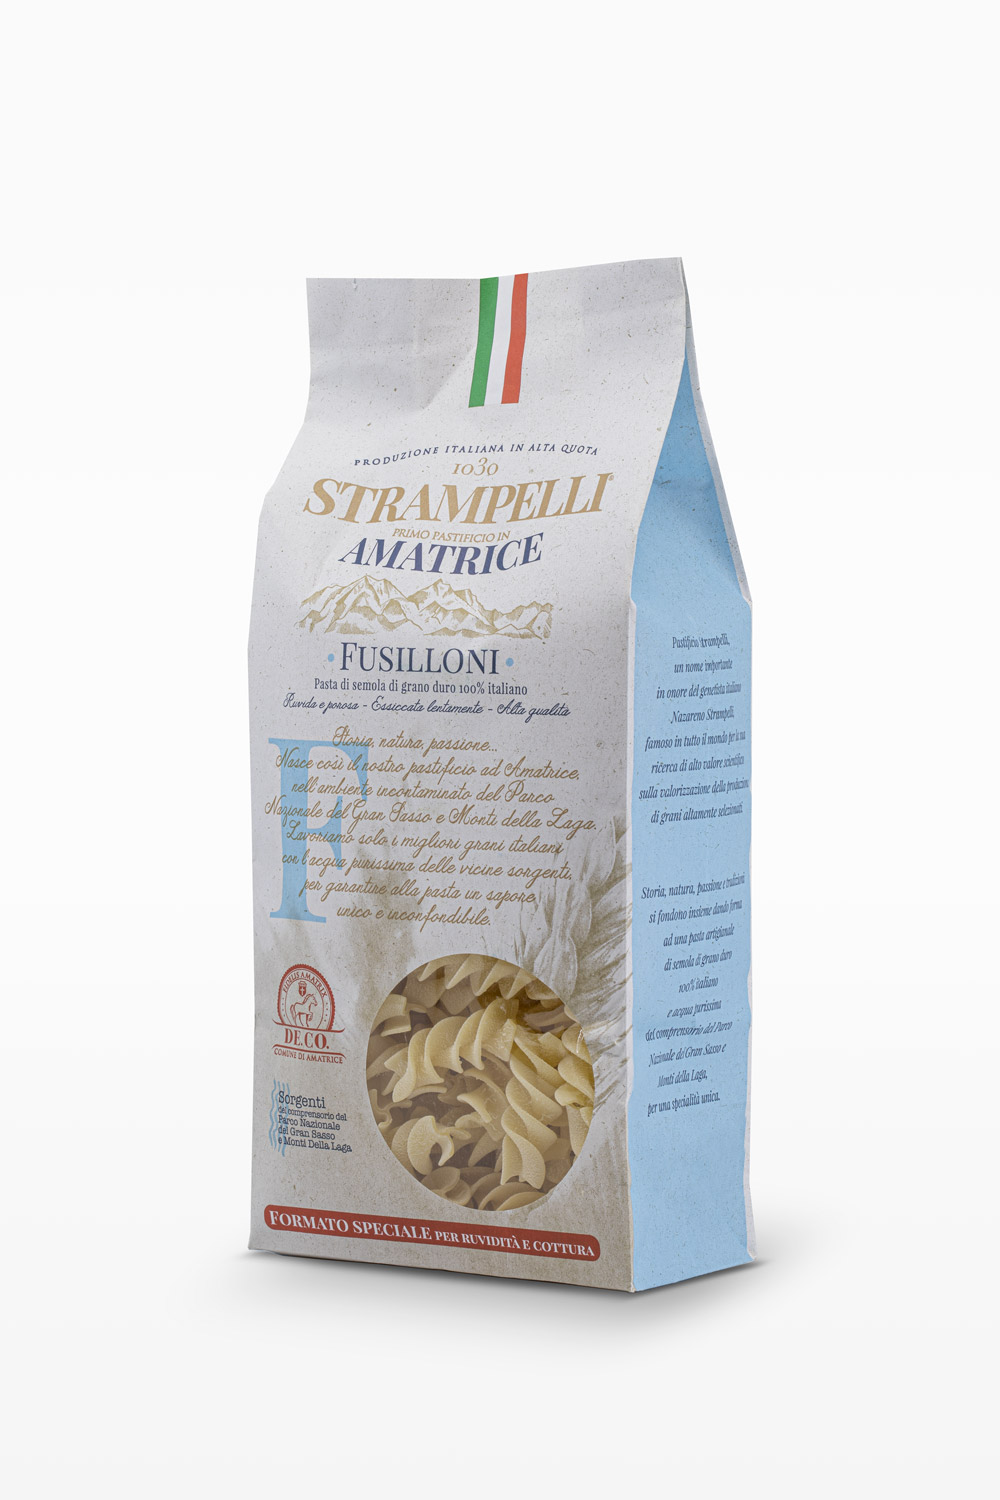 Fusilloni - Durum wheat semolina pasta, rough and porous, 100% Italian wheat, slow drying at low temperature.